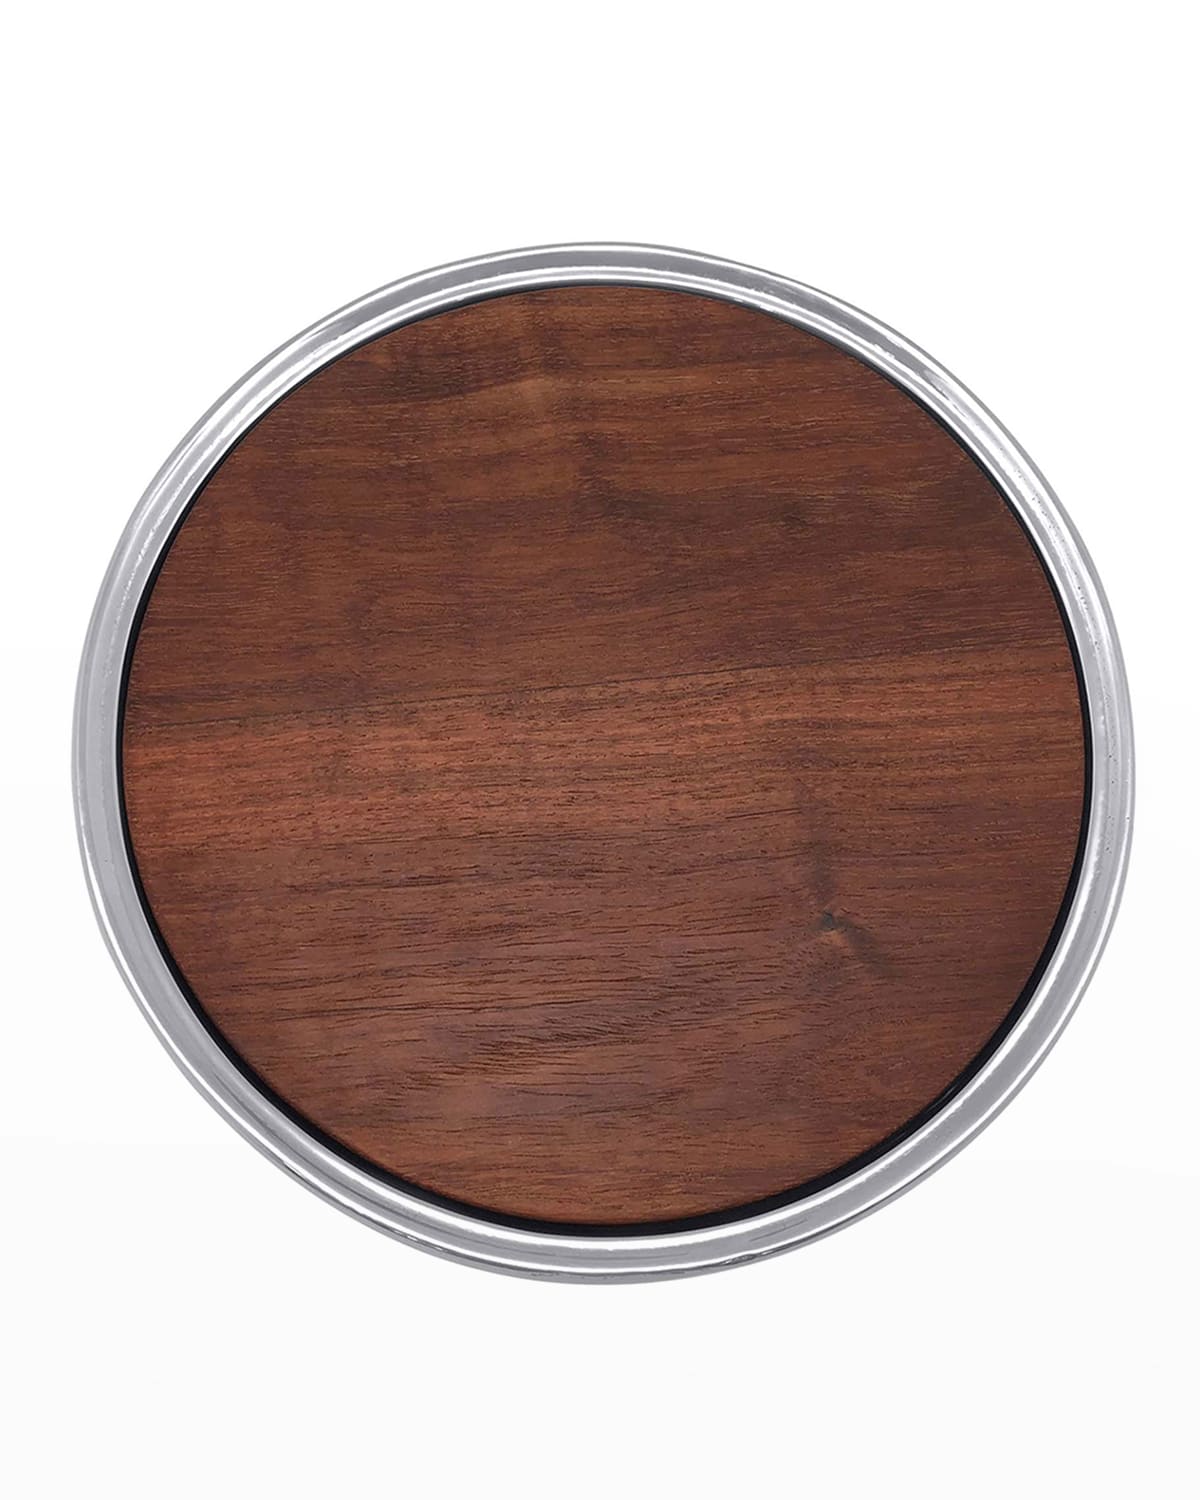 Mariposa Signature Round Cheese Board With Dark Wood Insert In Brown